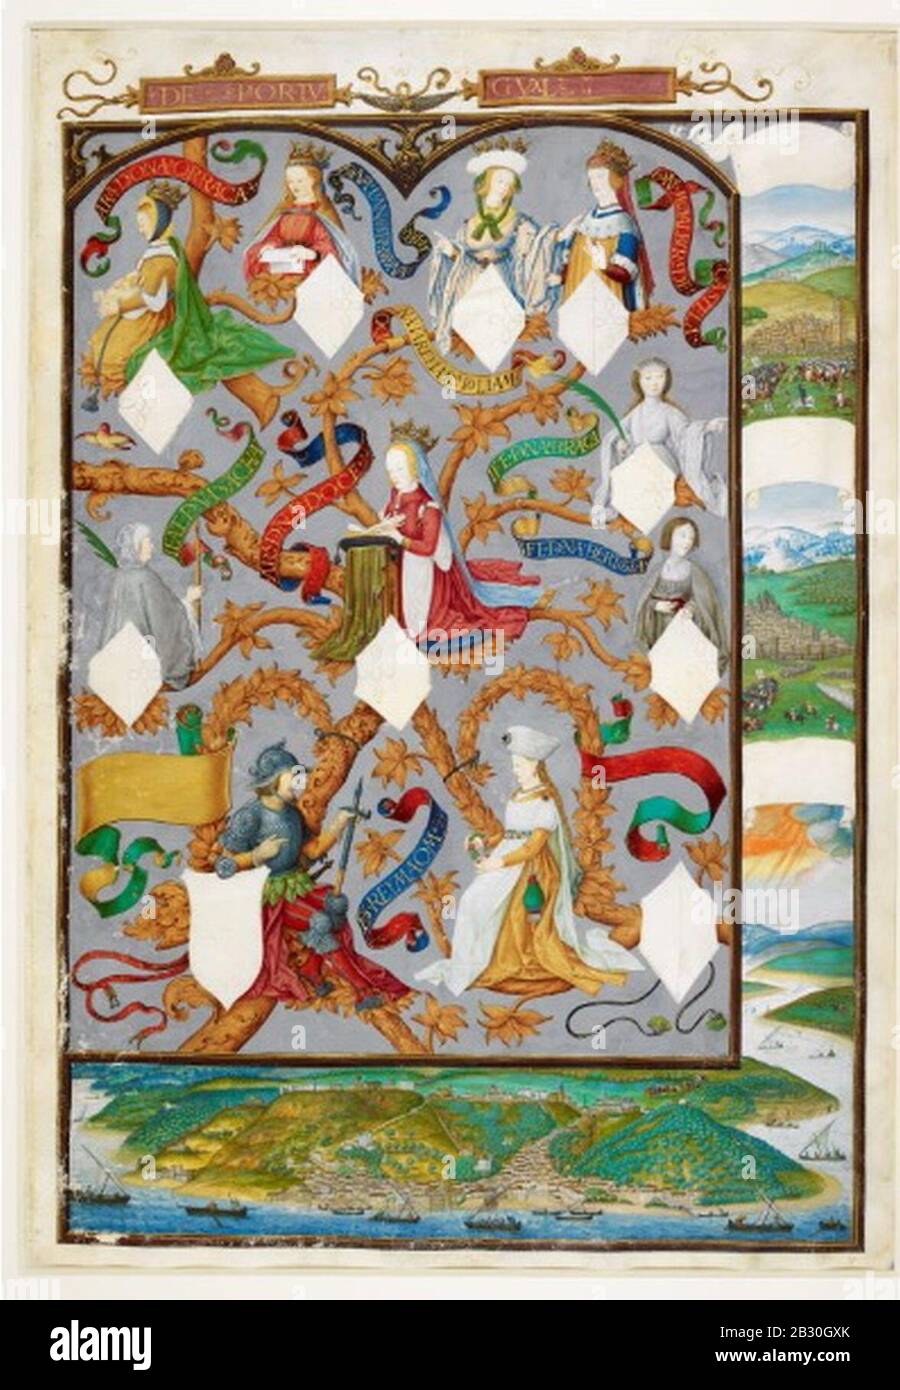 Genealogia dos Reis de Portugal (BL Add MS 1253) - f.8r. Stock Photo